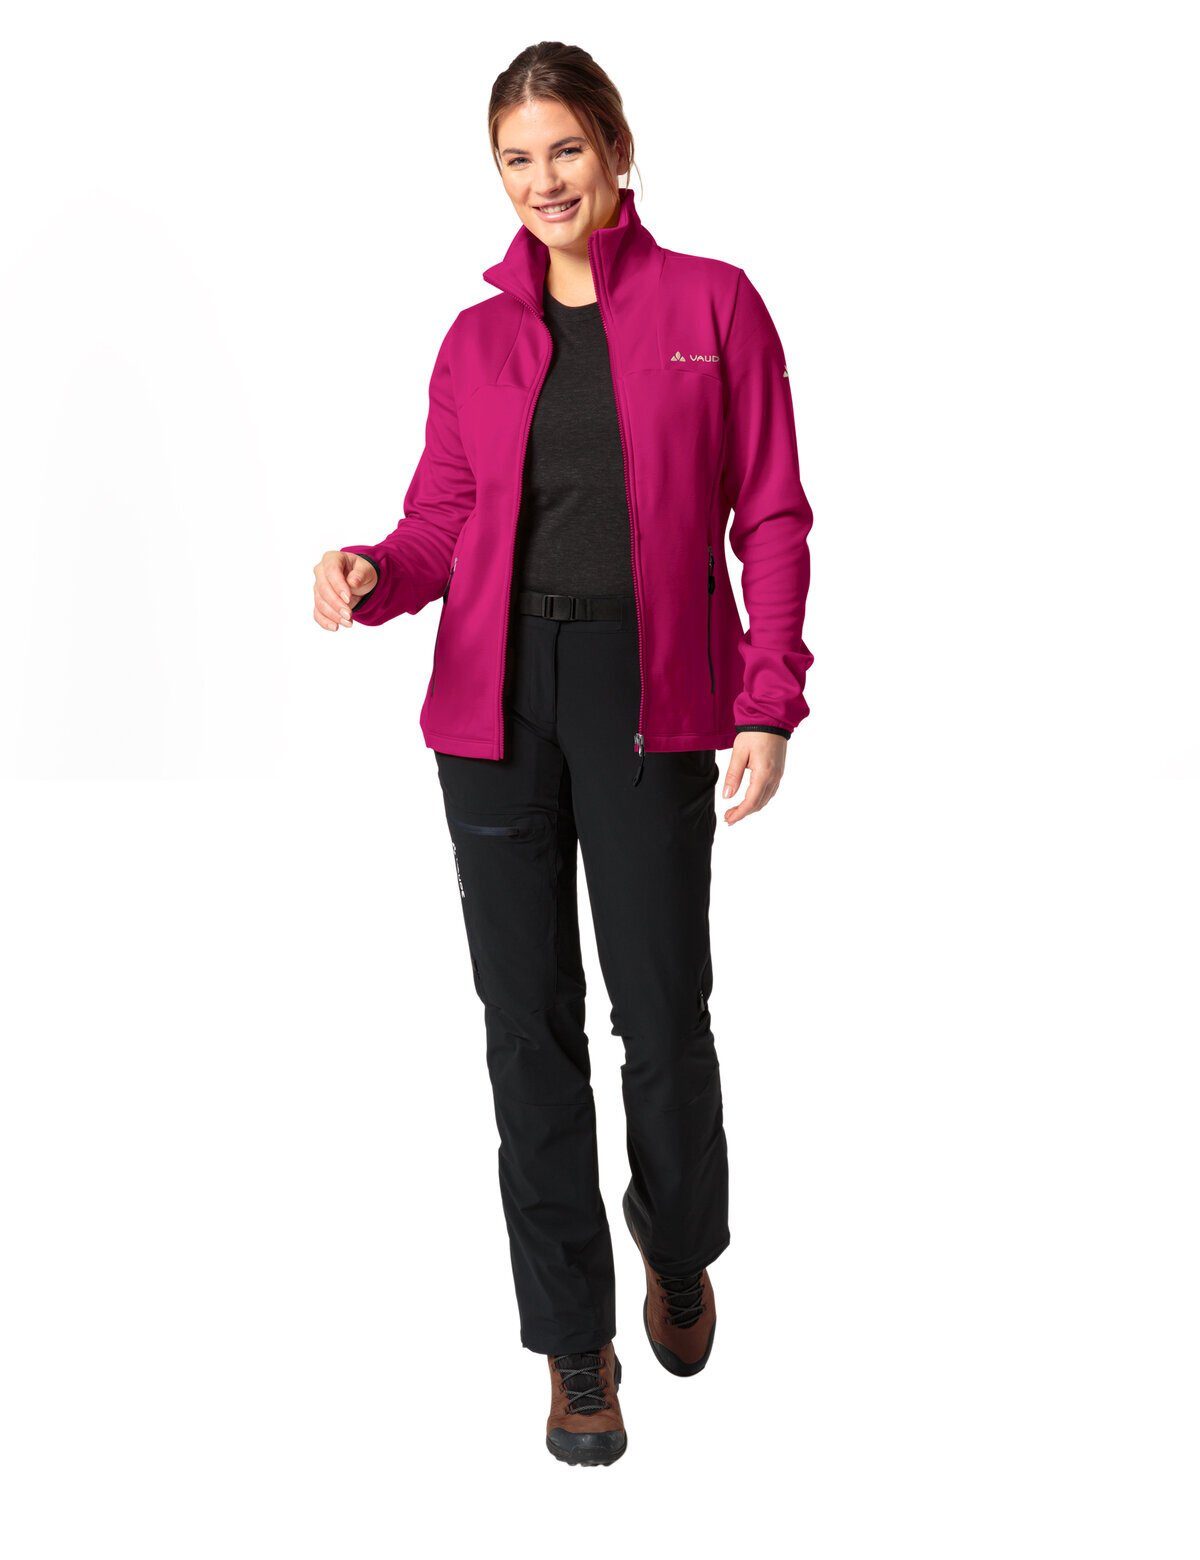 VAUDE Outdoorjacke Women's Jacket pink kompensiert Valsorda Klimaneutral rich Fleece (1-St)